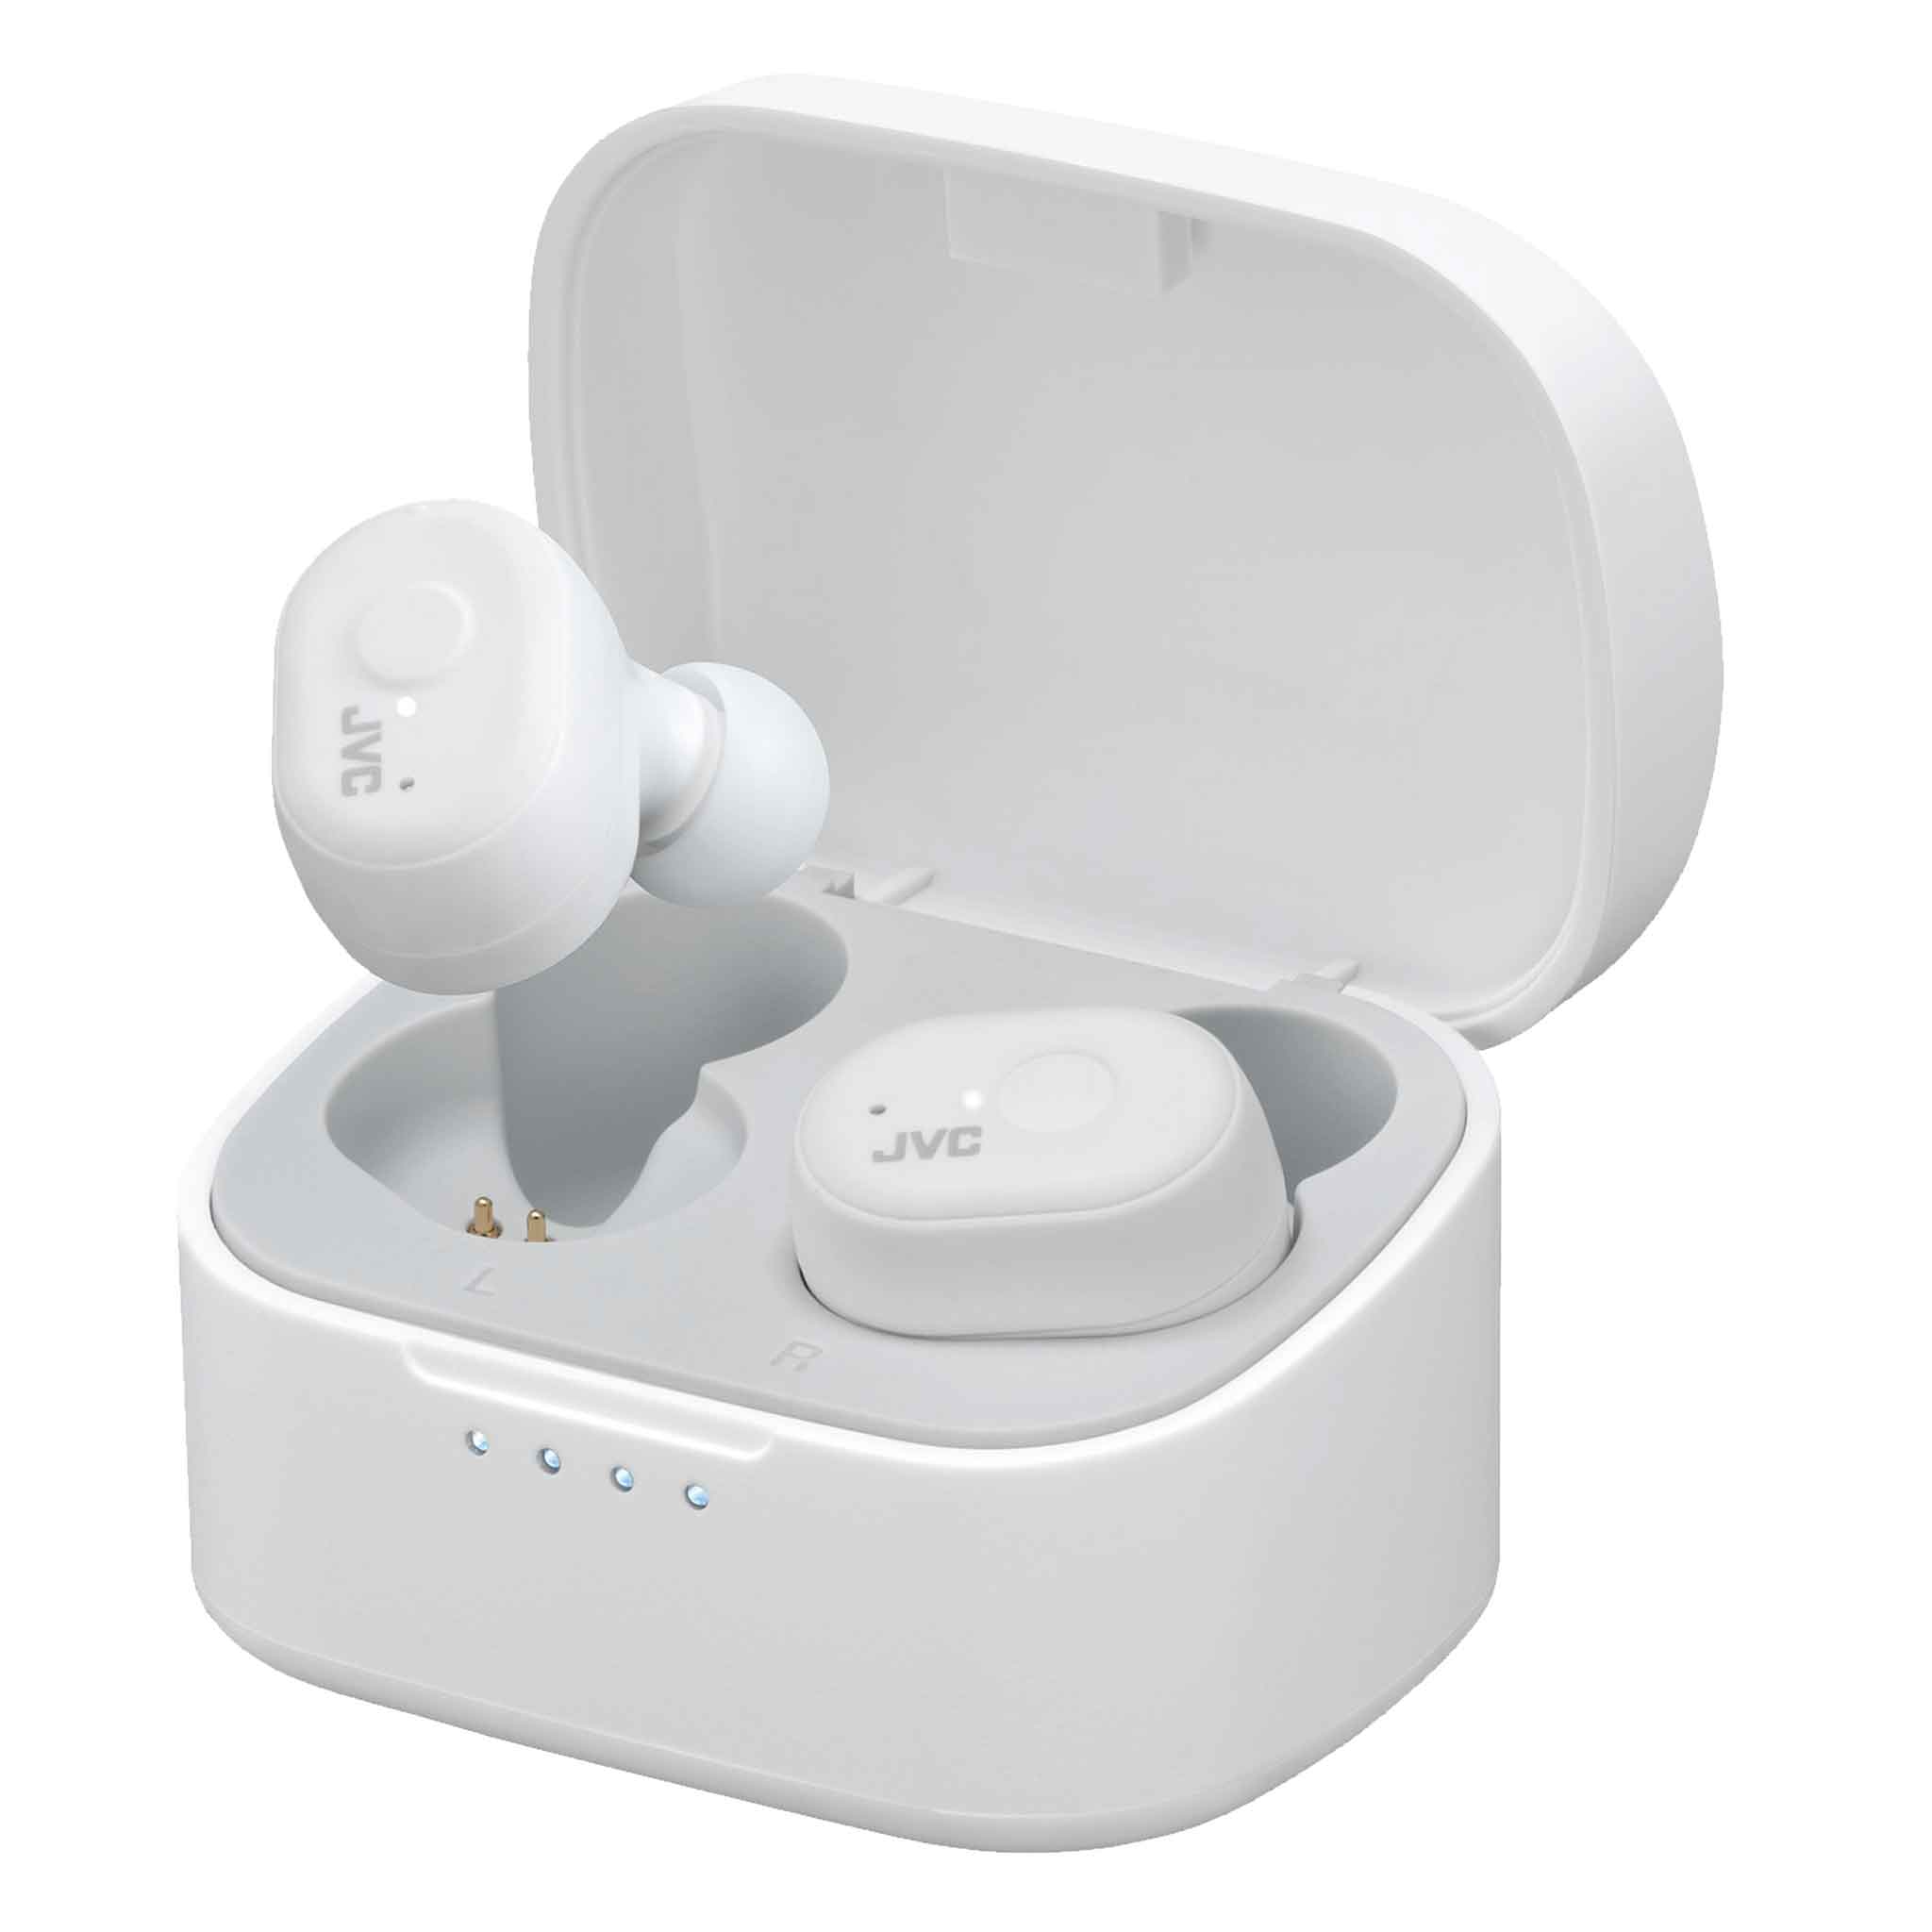 HA-A11T-W-RCCKS Wireless Memory Foam Earbuds in White - FREE Protective Case, Cleaning Kit &amp; Spray Bundle